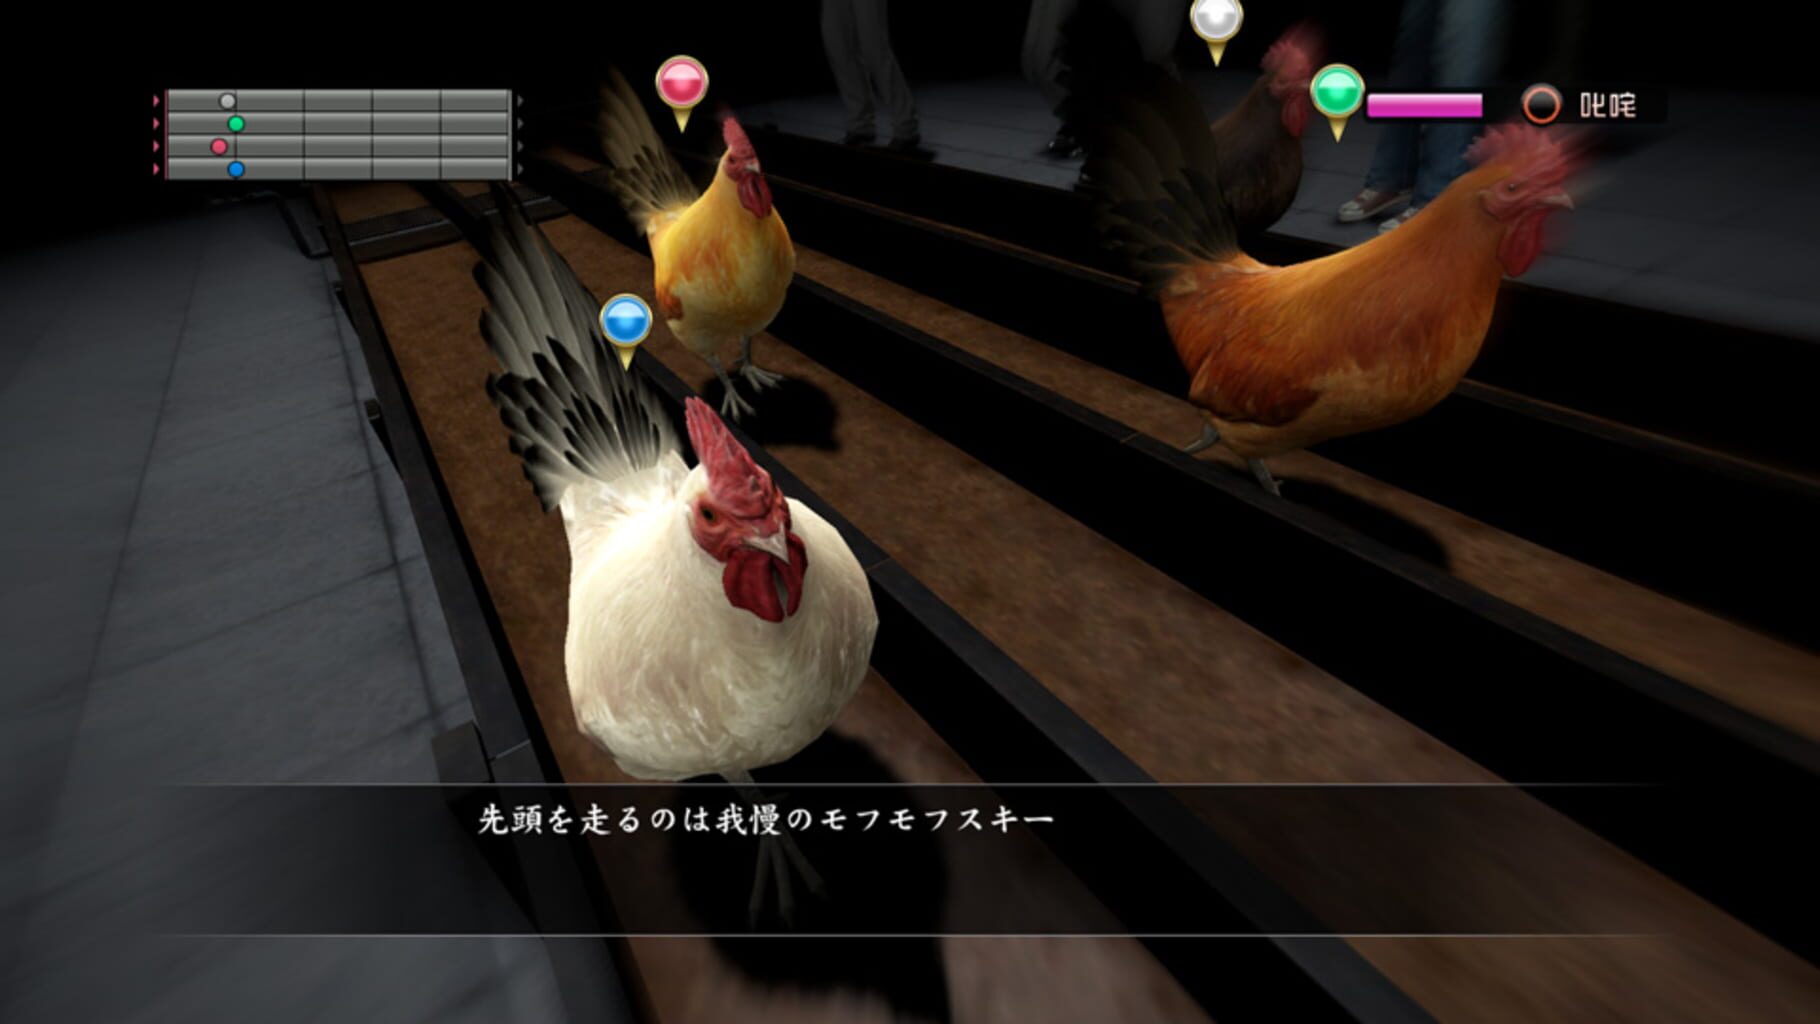 Yakuza 5 Remastered screenshots